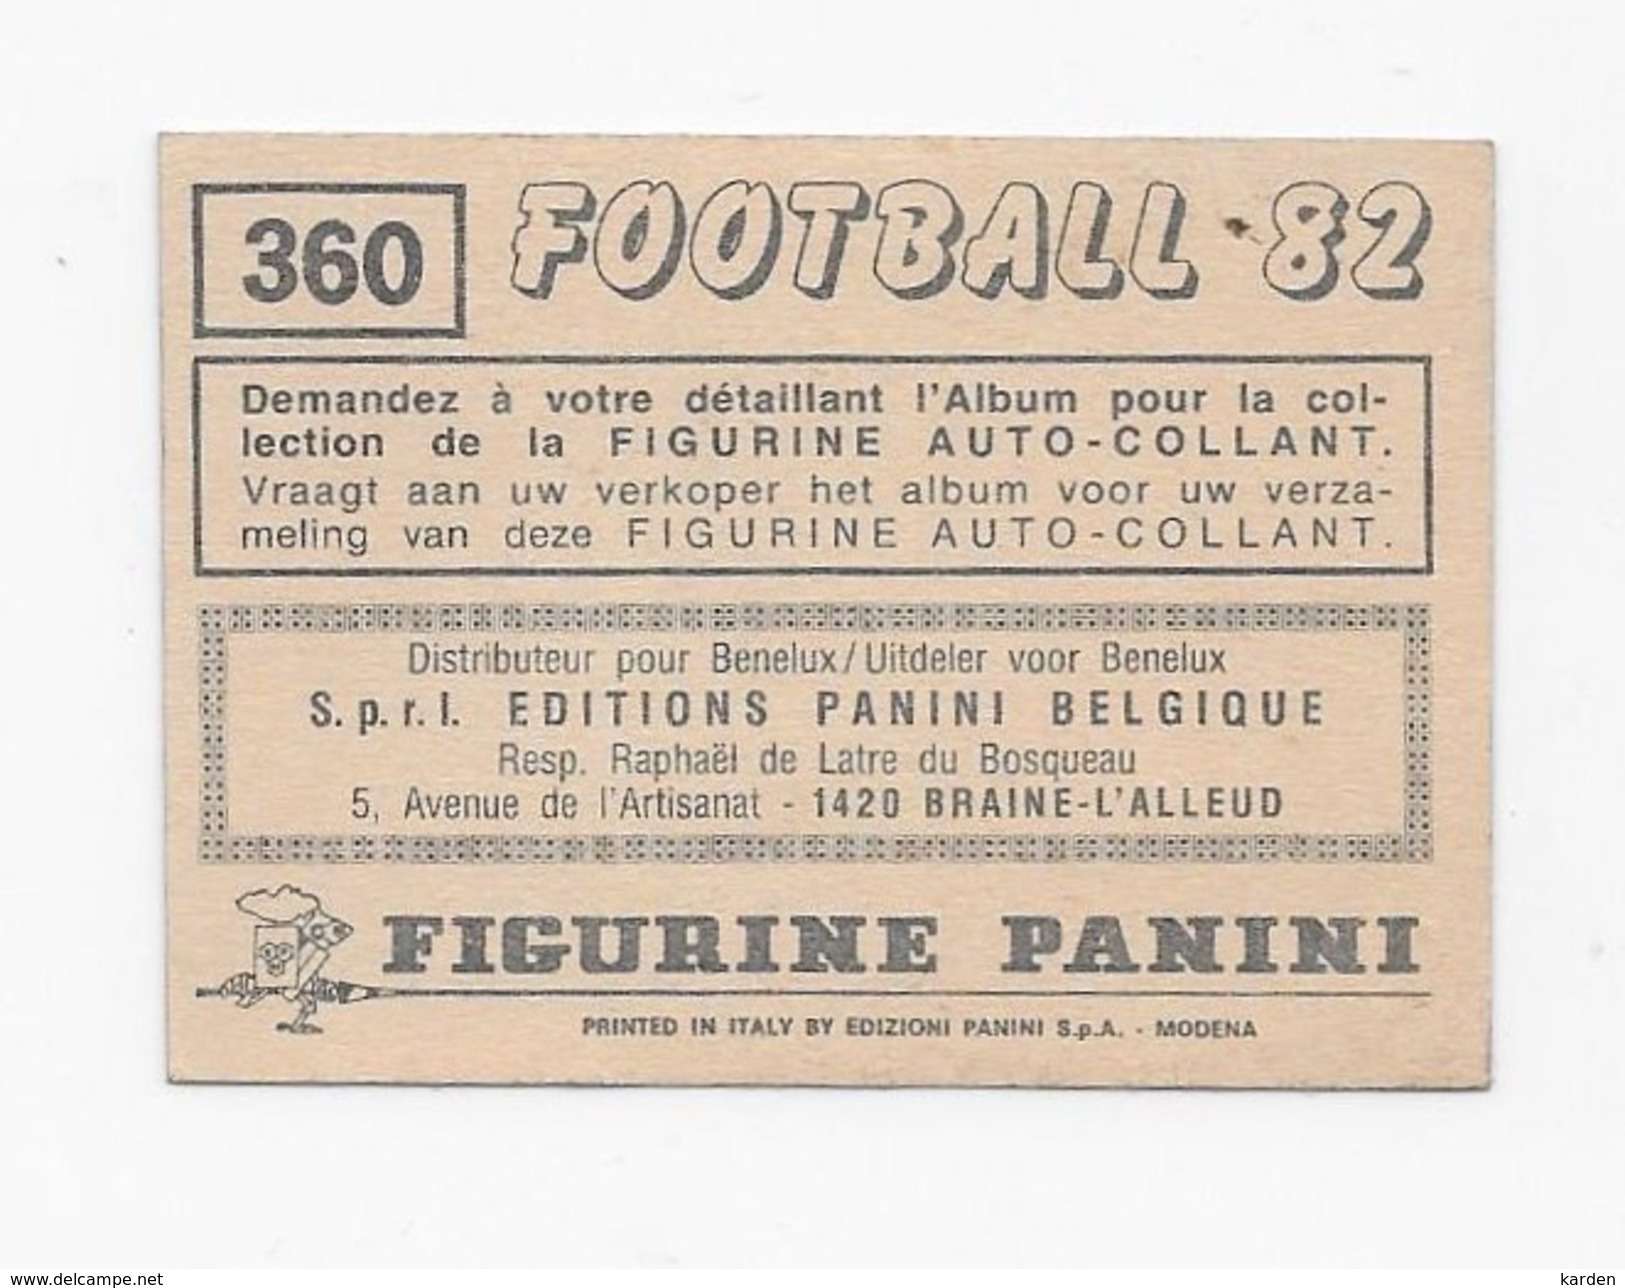 Panini Sticker Football - 82 Voetbalploeg Boom - Edition Néerlandaise